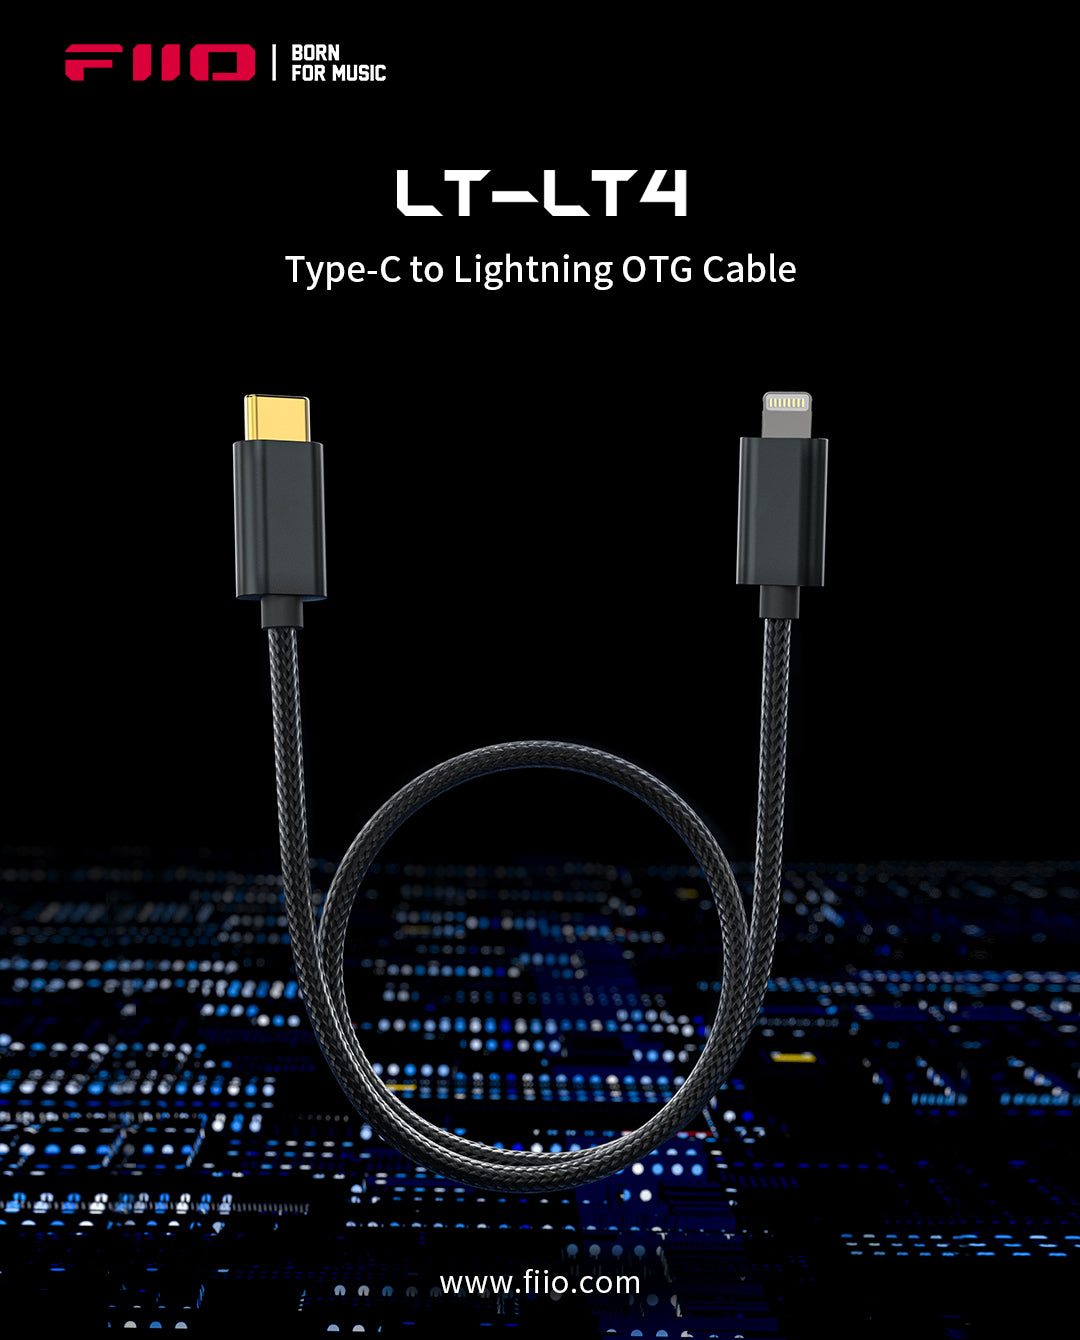 FiiO LA-TC1 (USB-A to USB-C) / LT-LT4 (USB-C to LTNG) / LT-TC4 (USB-C to USB-C) USB OTG Digital Cable